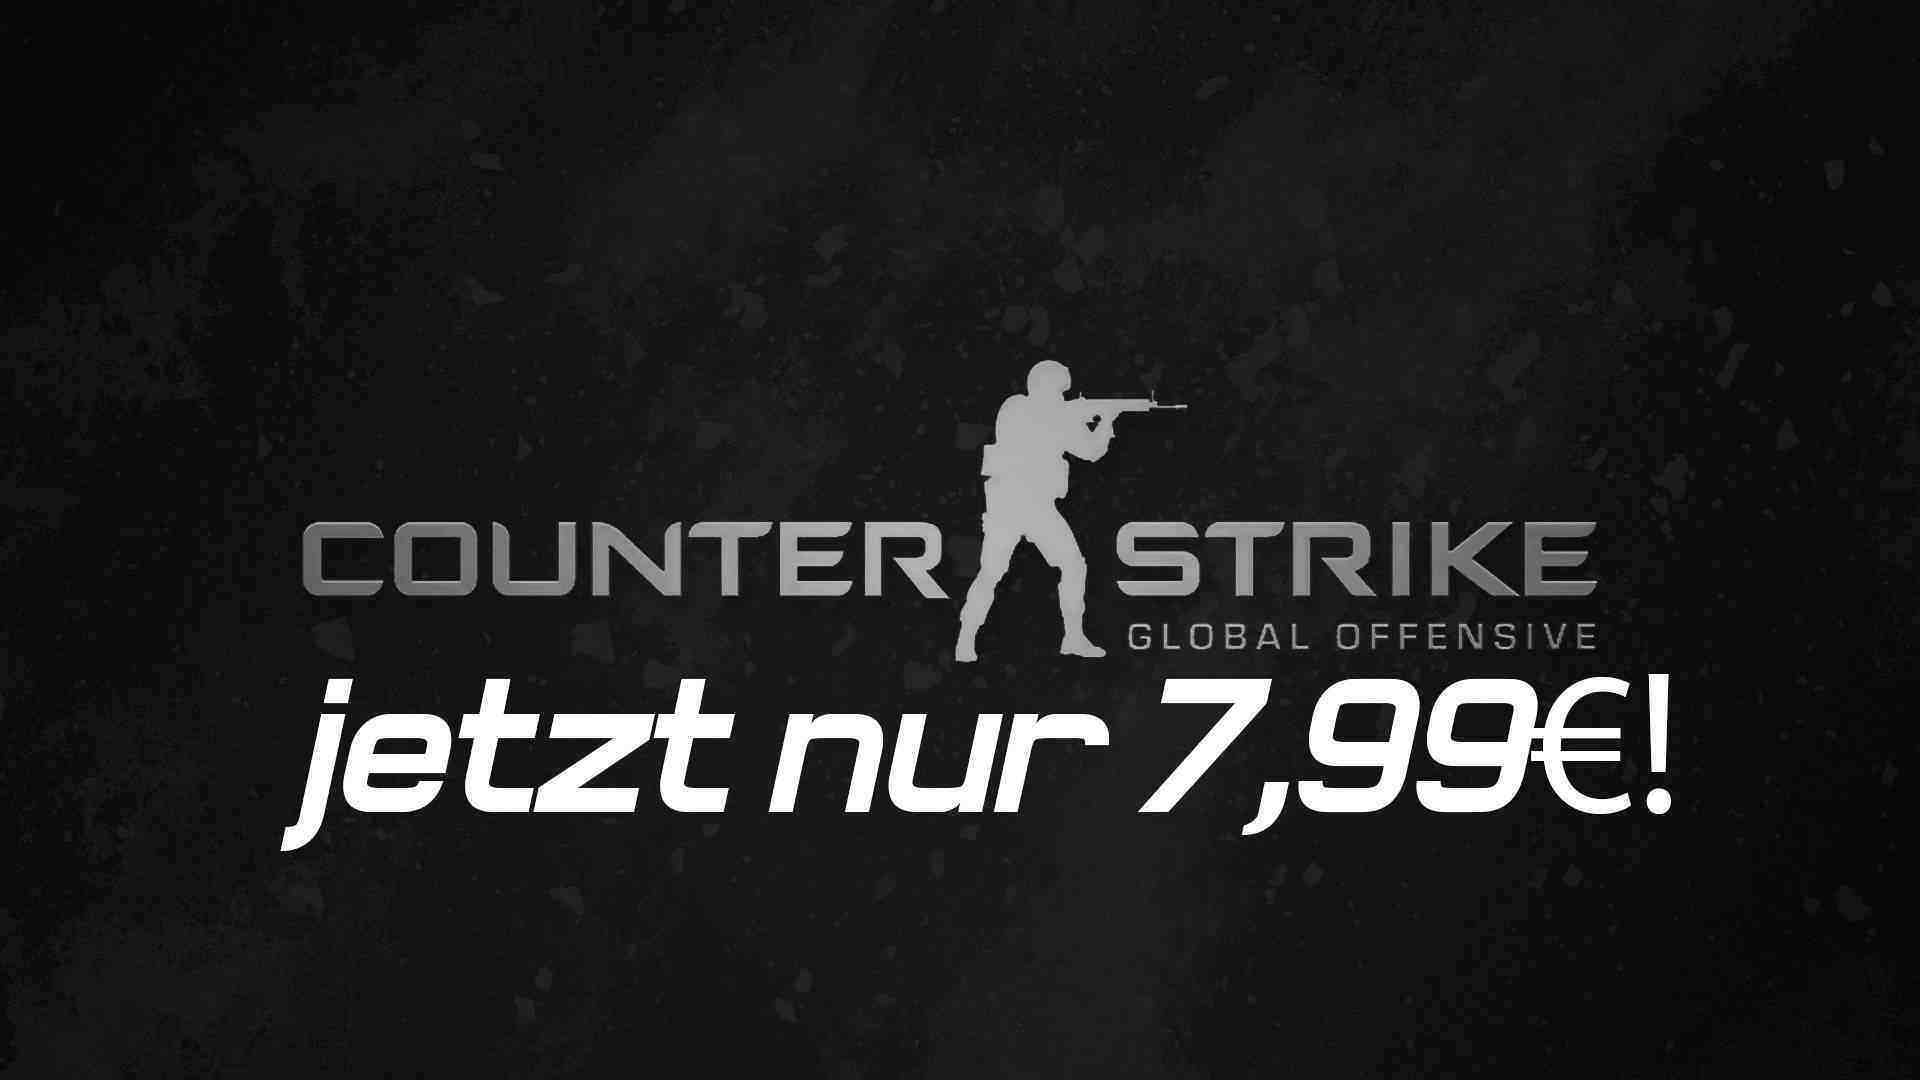 Counter Strike: Global Offensive gÃ¼nstig kaufen!